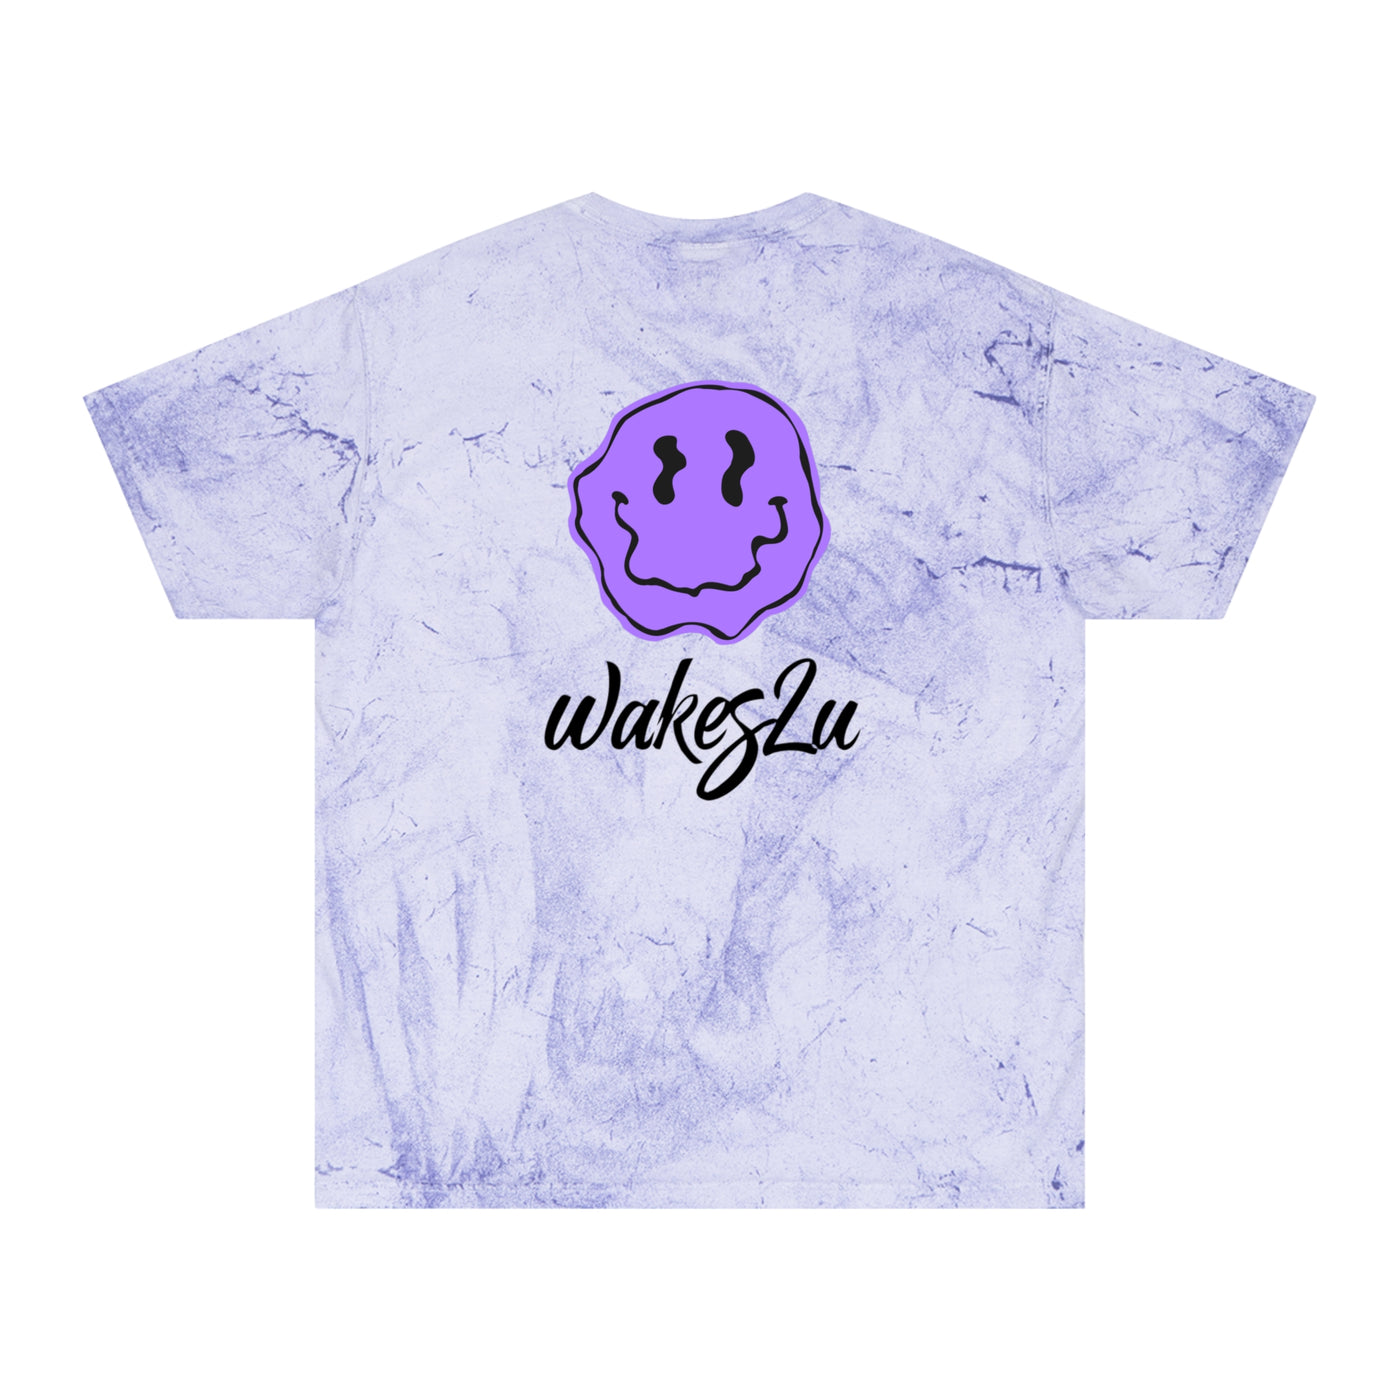 Wakes2u Color Blast "smiley" T-Shirt